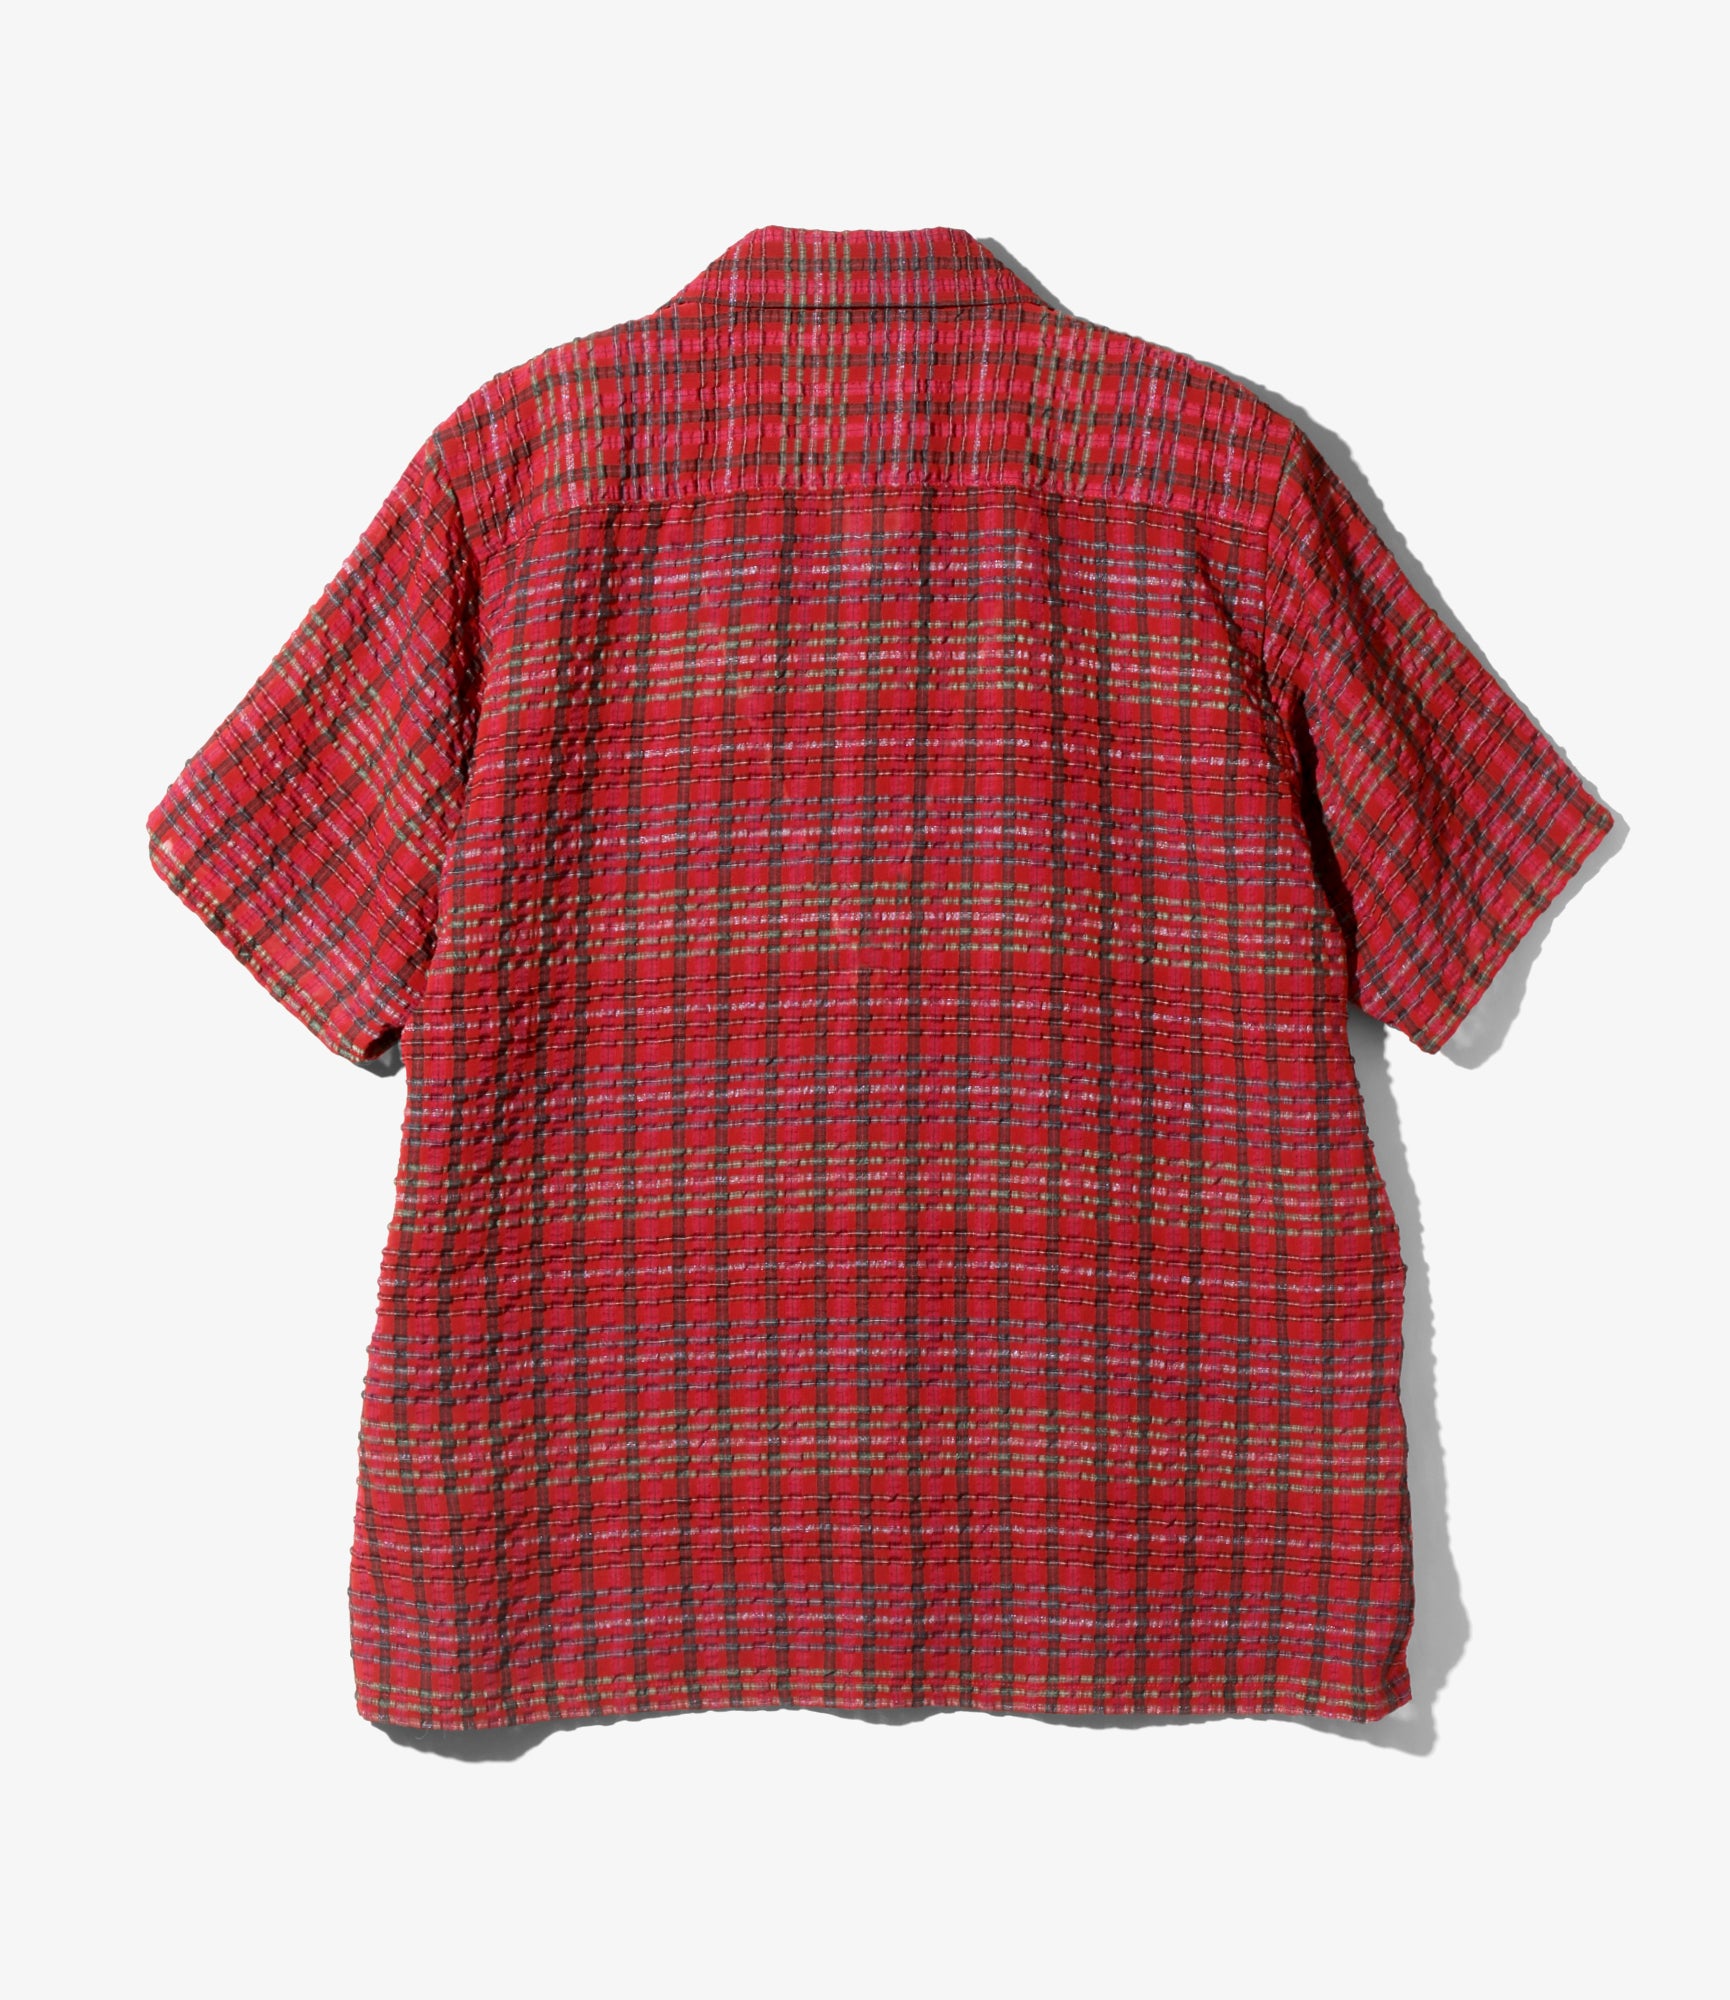 Needles S/S One-Up Shirt - PE/R Chiffon Sucker Plaid - Red